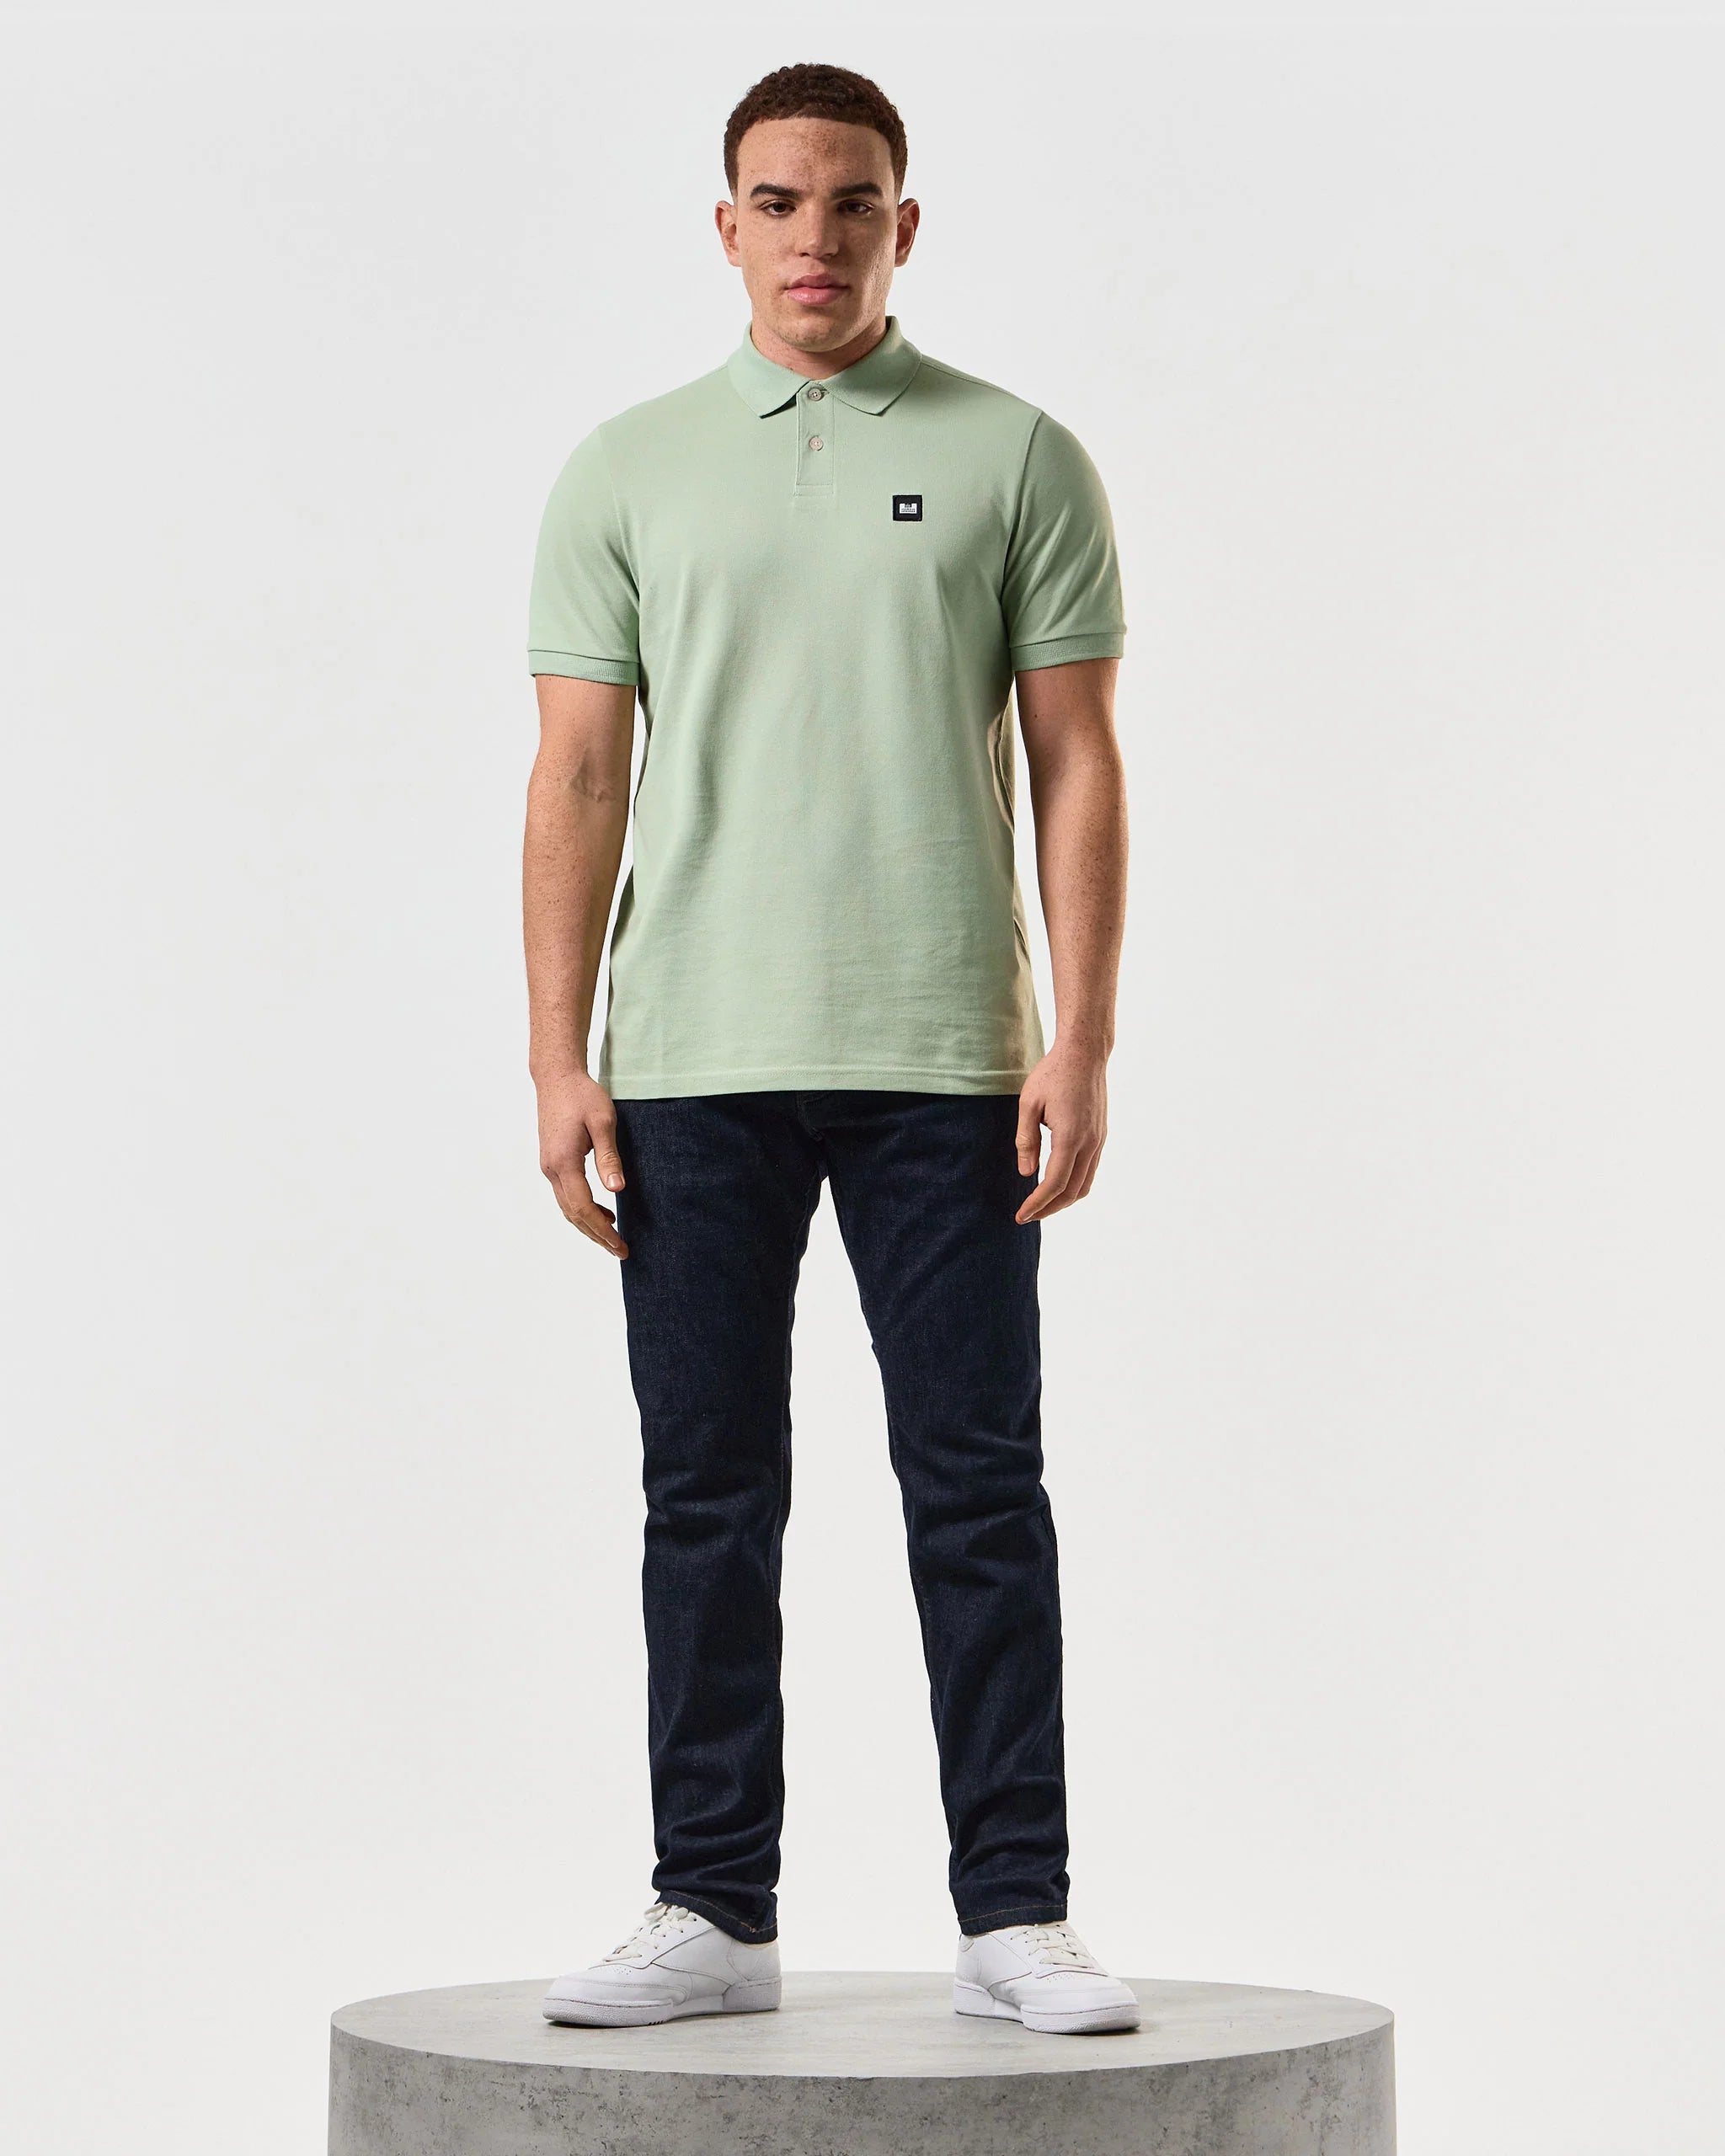 Weekend Offender Caneiros Polo Shirt Pale Moss Green - Raw Menswear